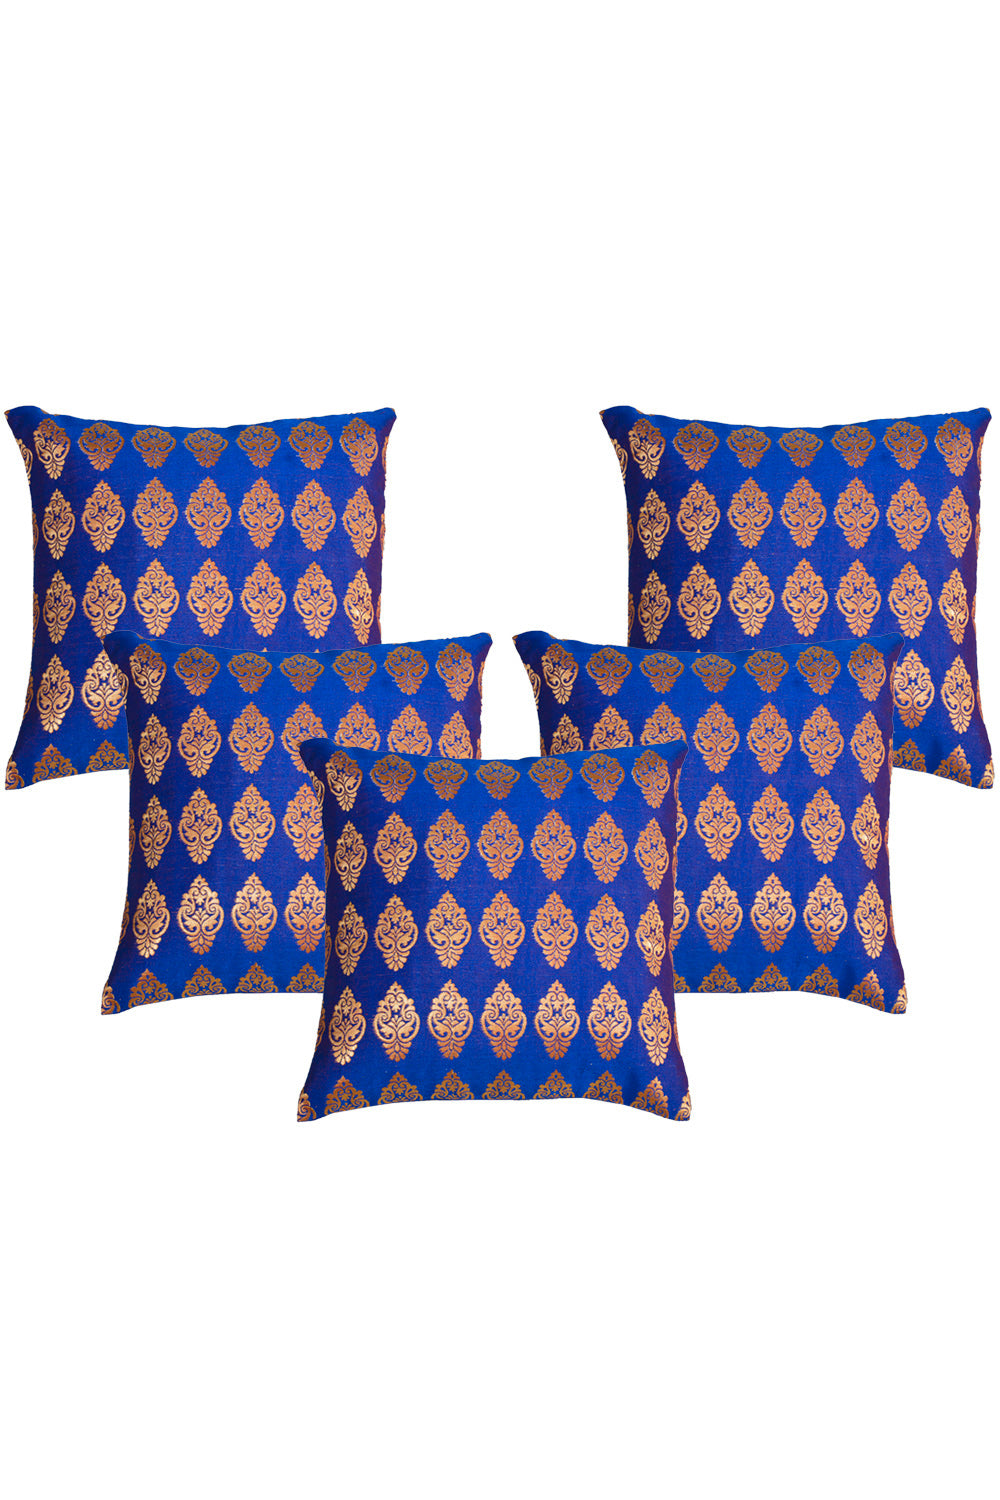 Silkfab Set 0f 5 Decorative Silk Cushion Covers (16x16) Boota Blue - SILKFAB